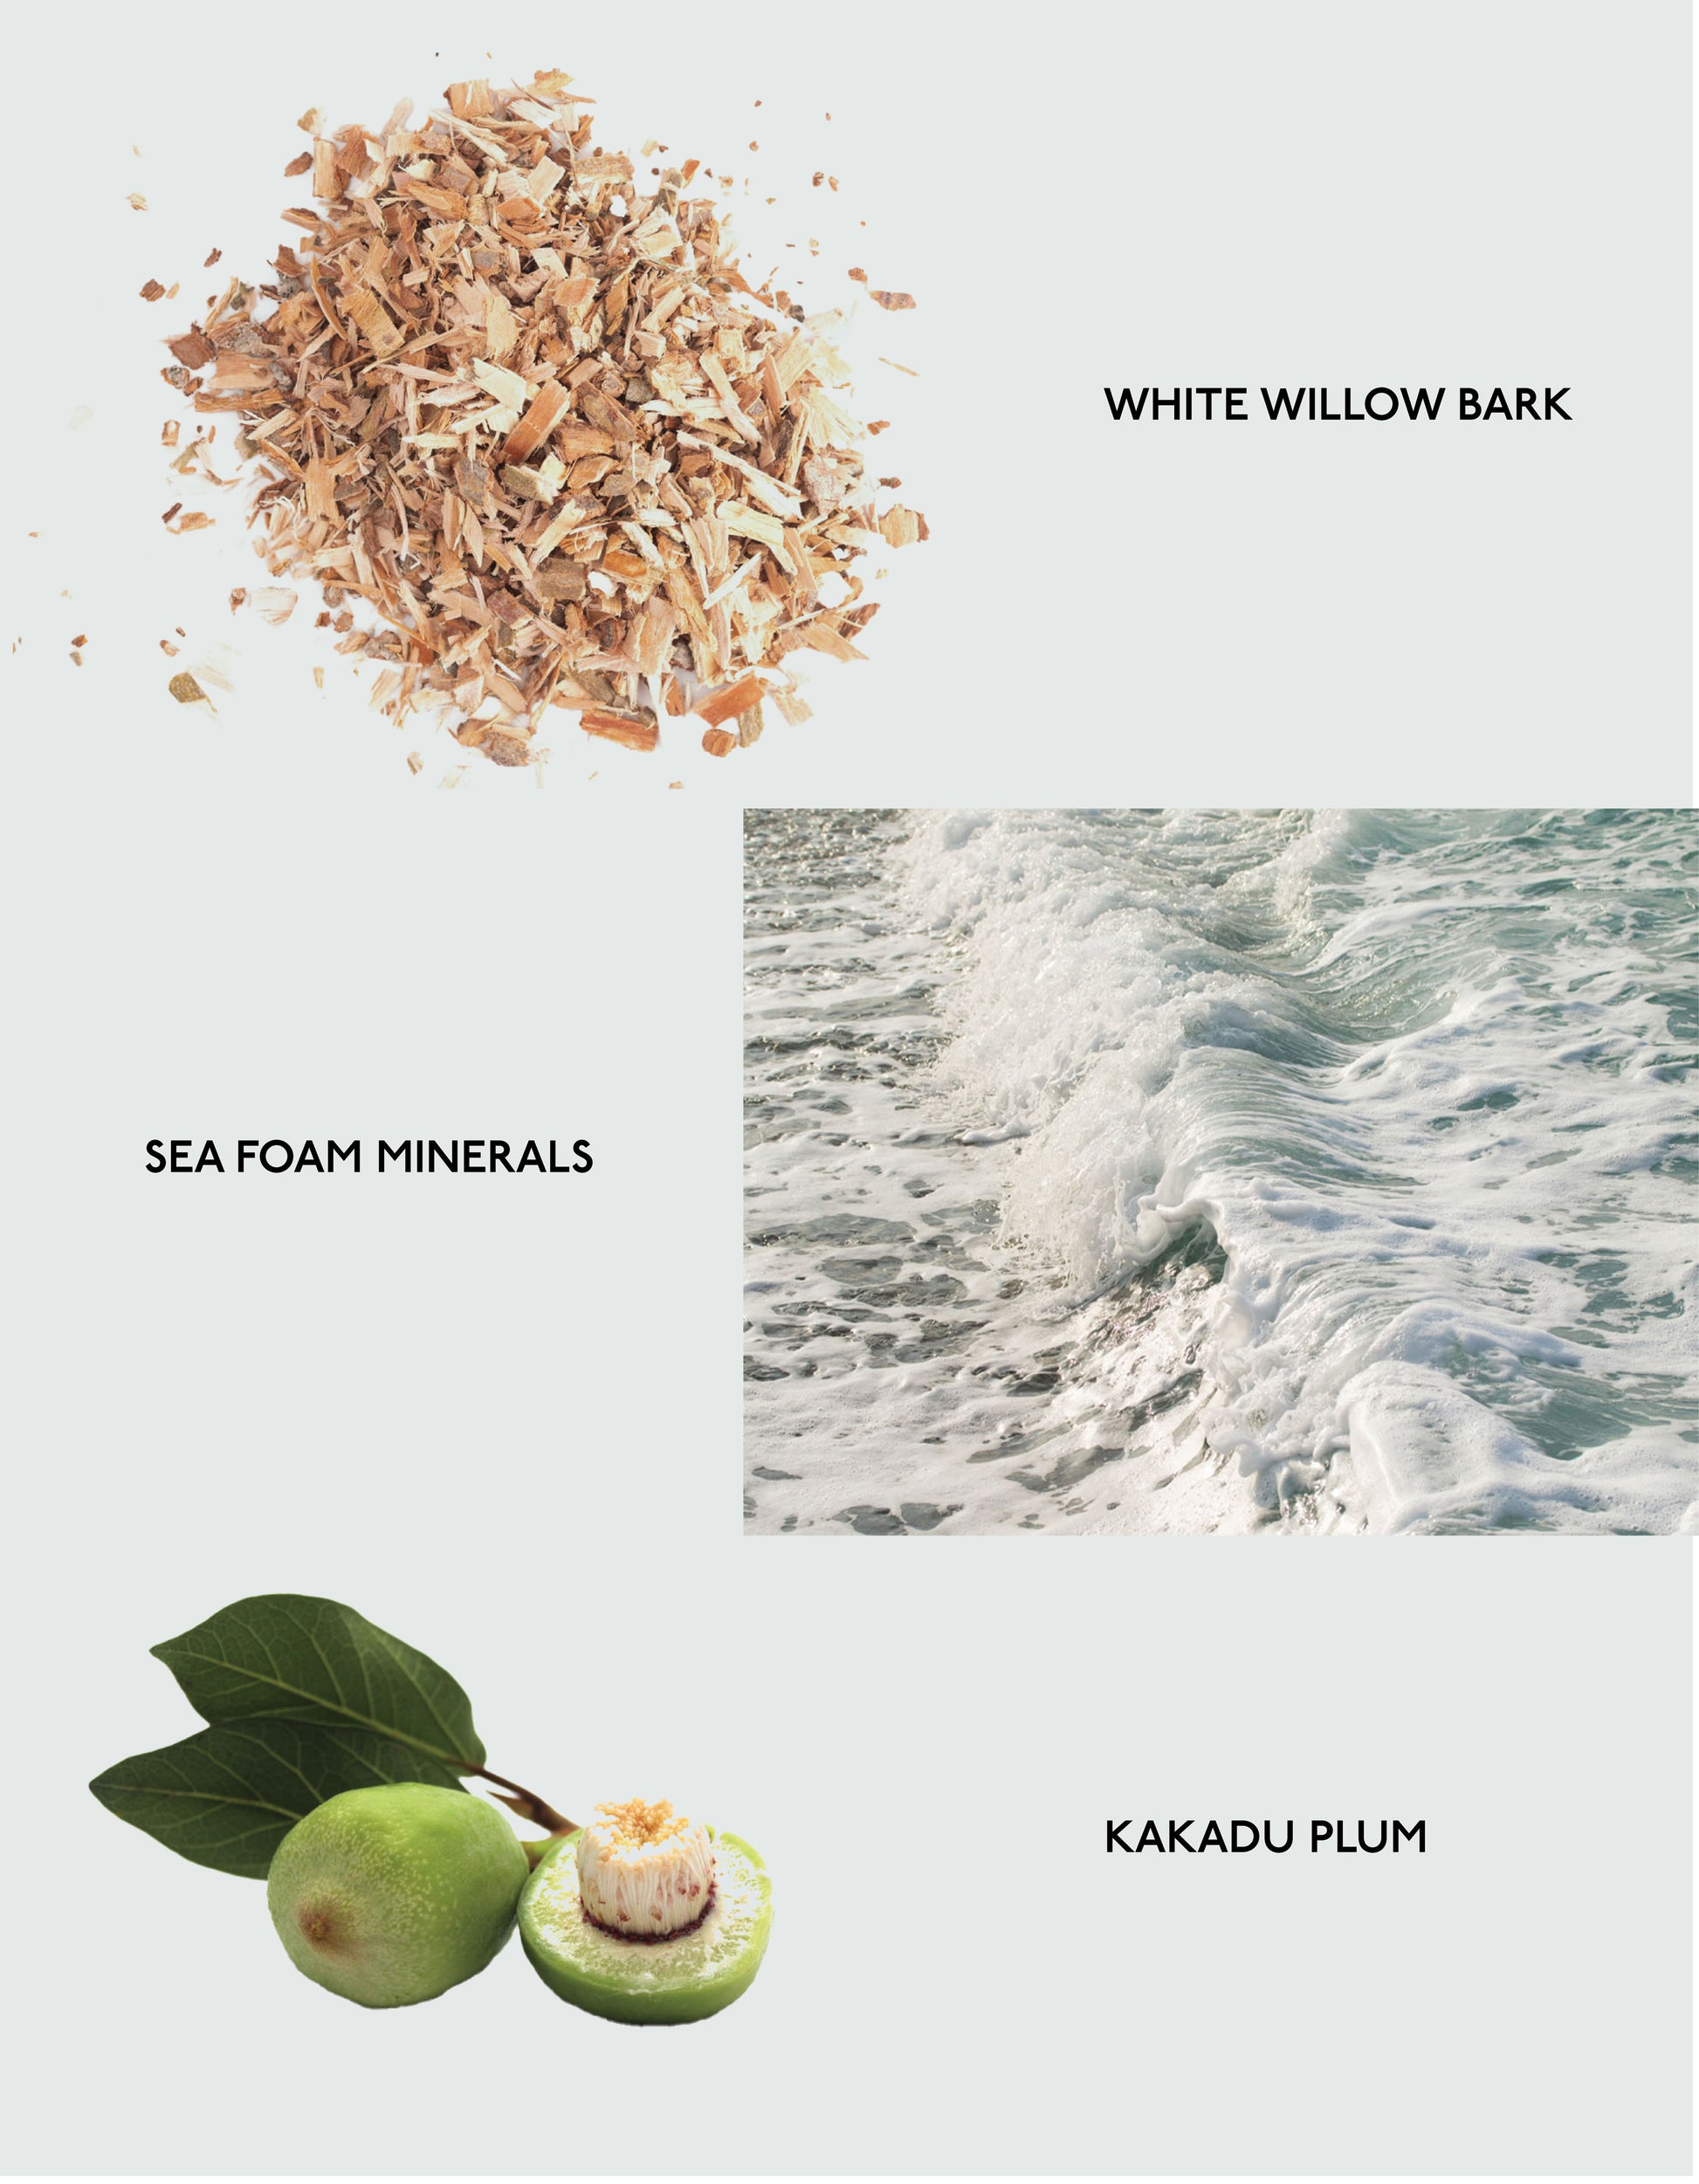 White Willow Bark, Sea form minerals, and Kakadu Plum.